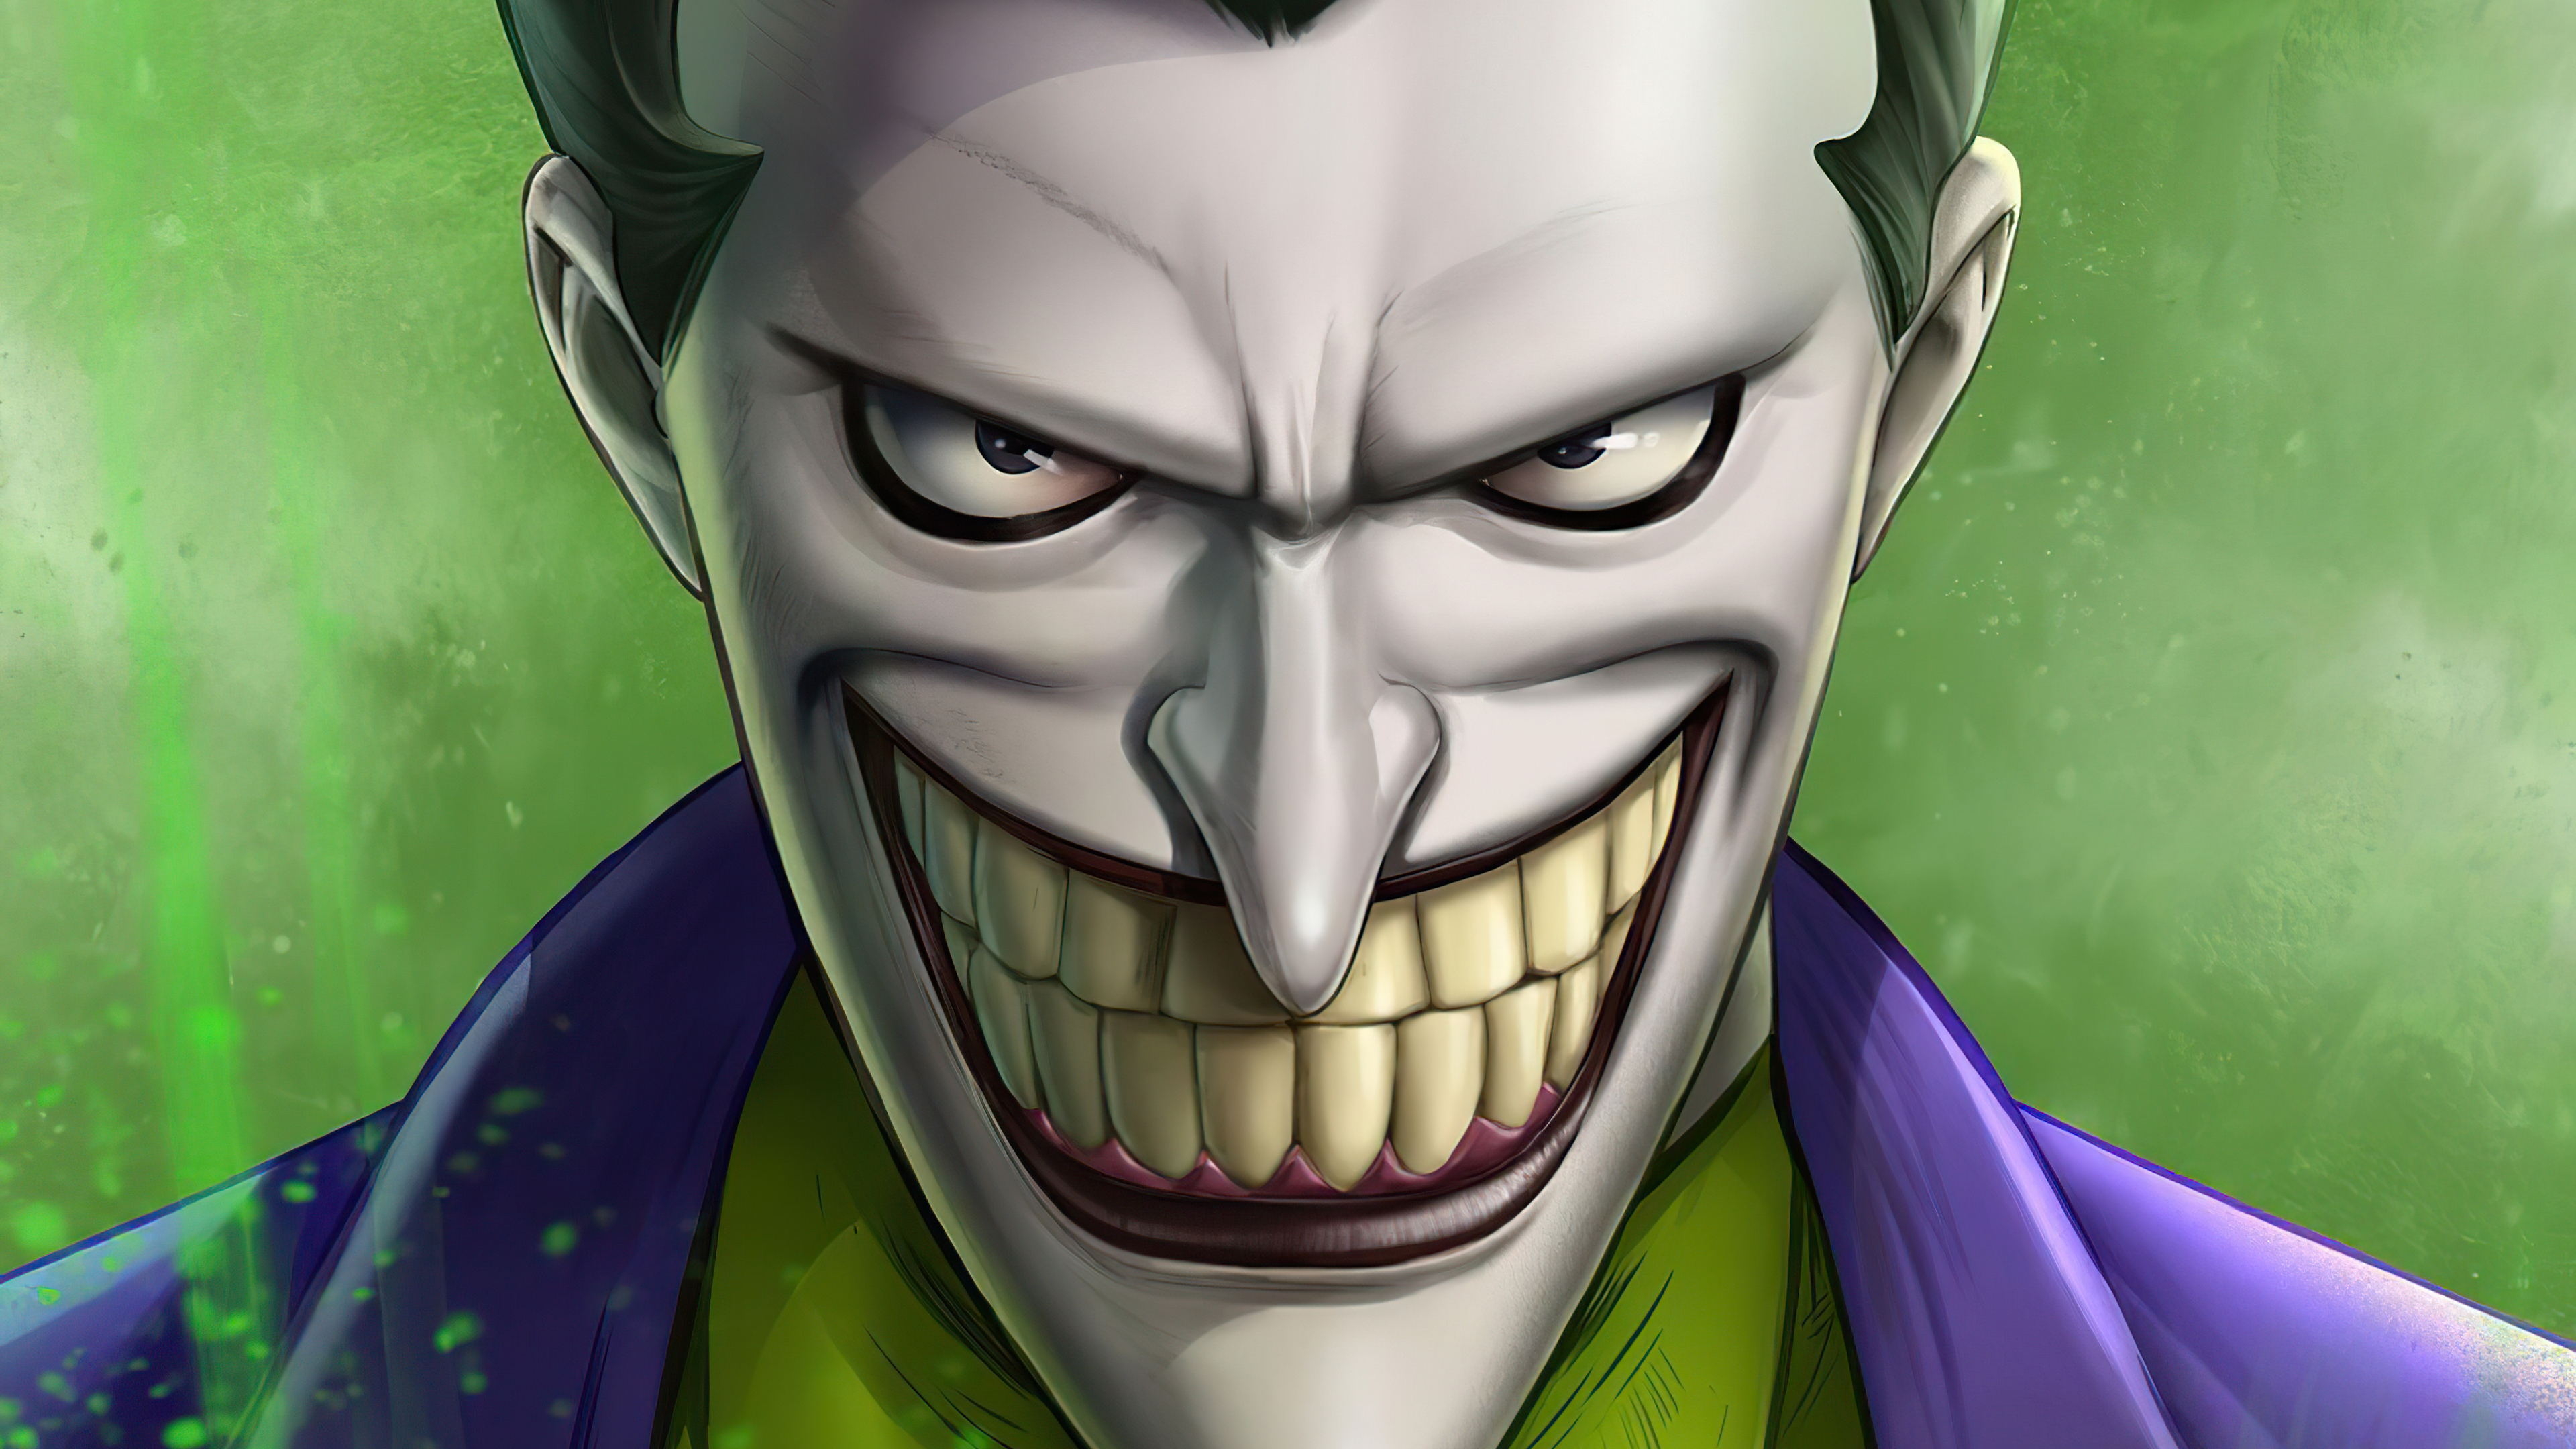 Joker Infinite Smile 4k Wallpaper,HD Superheroes Wallpapers,4k ...